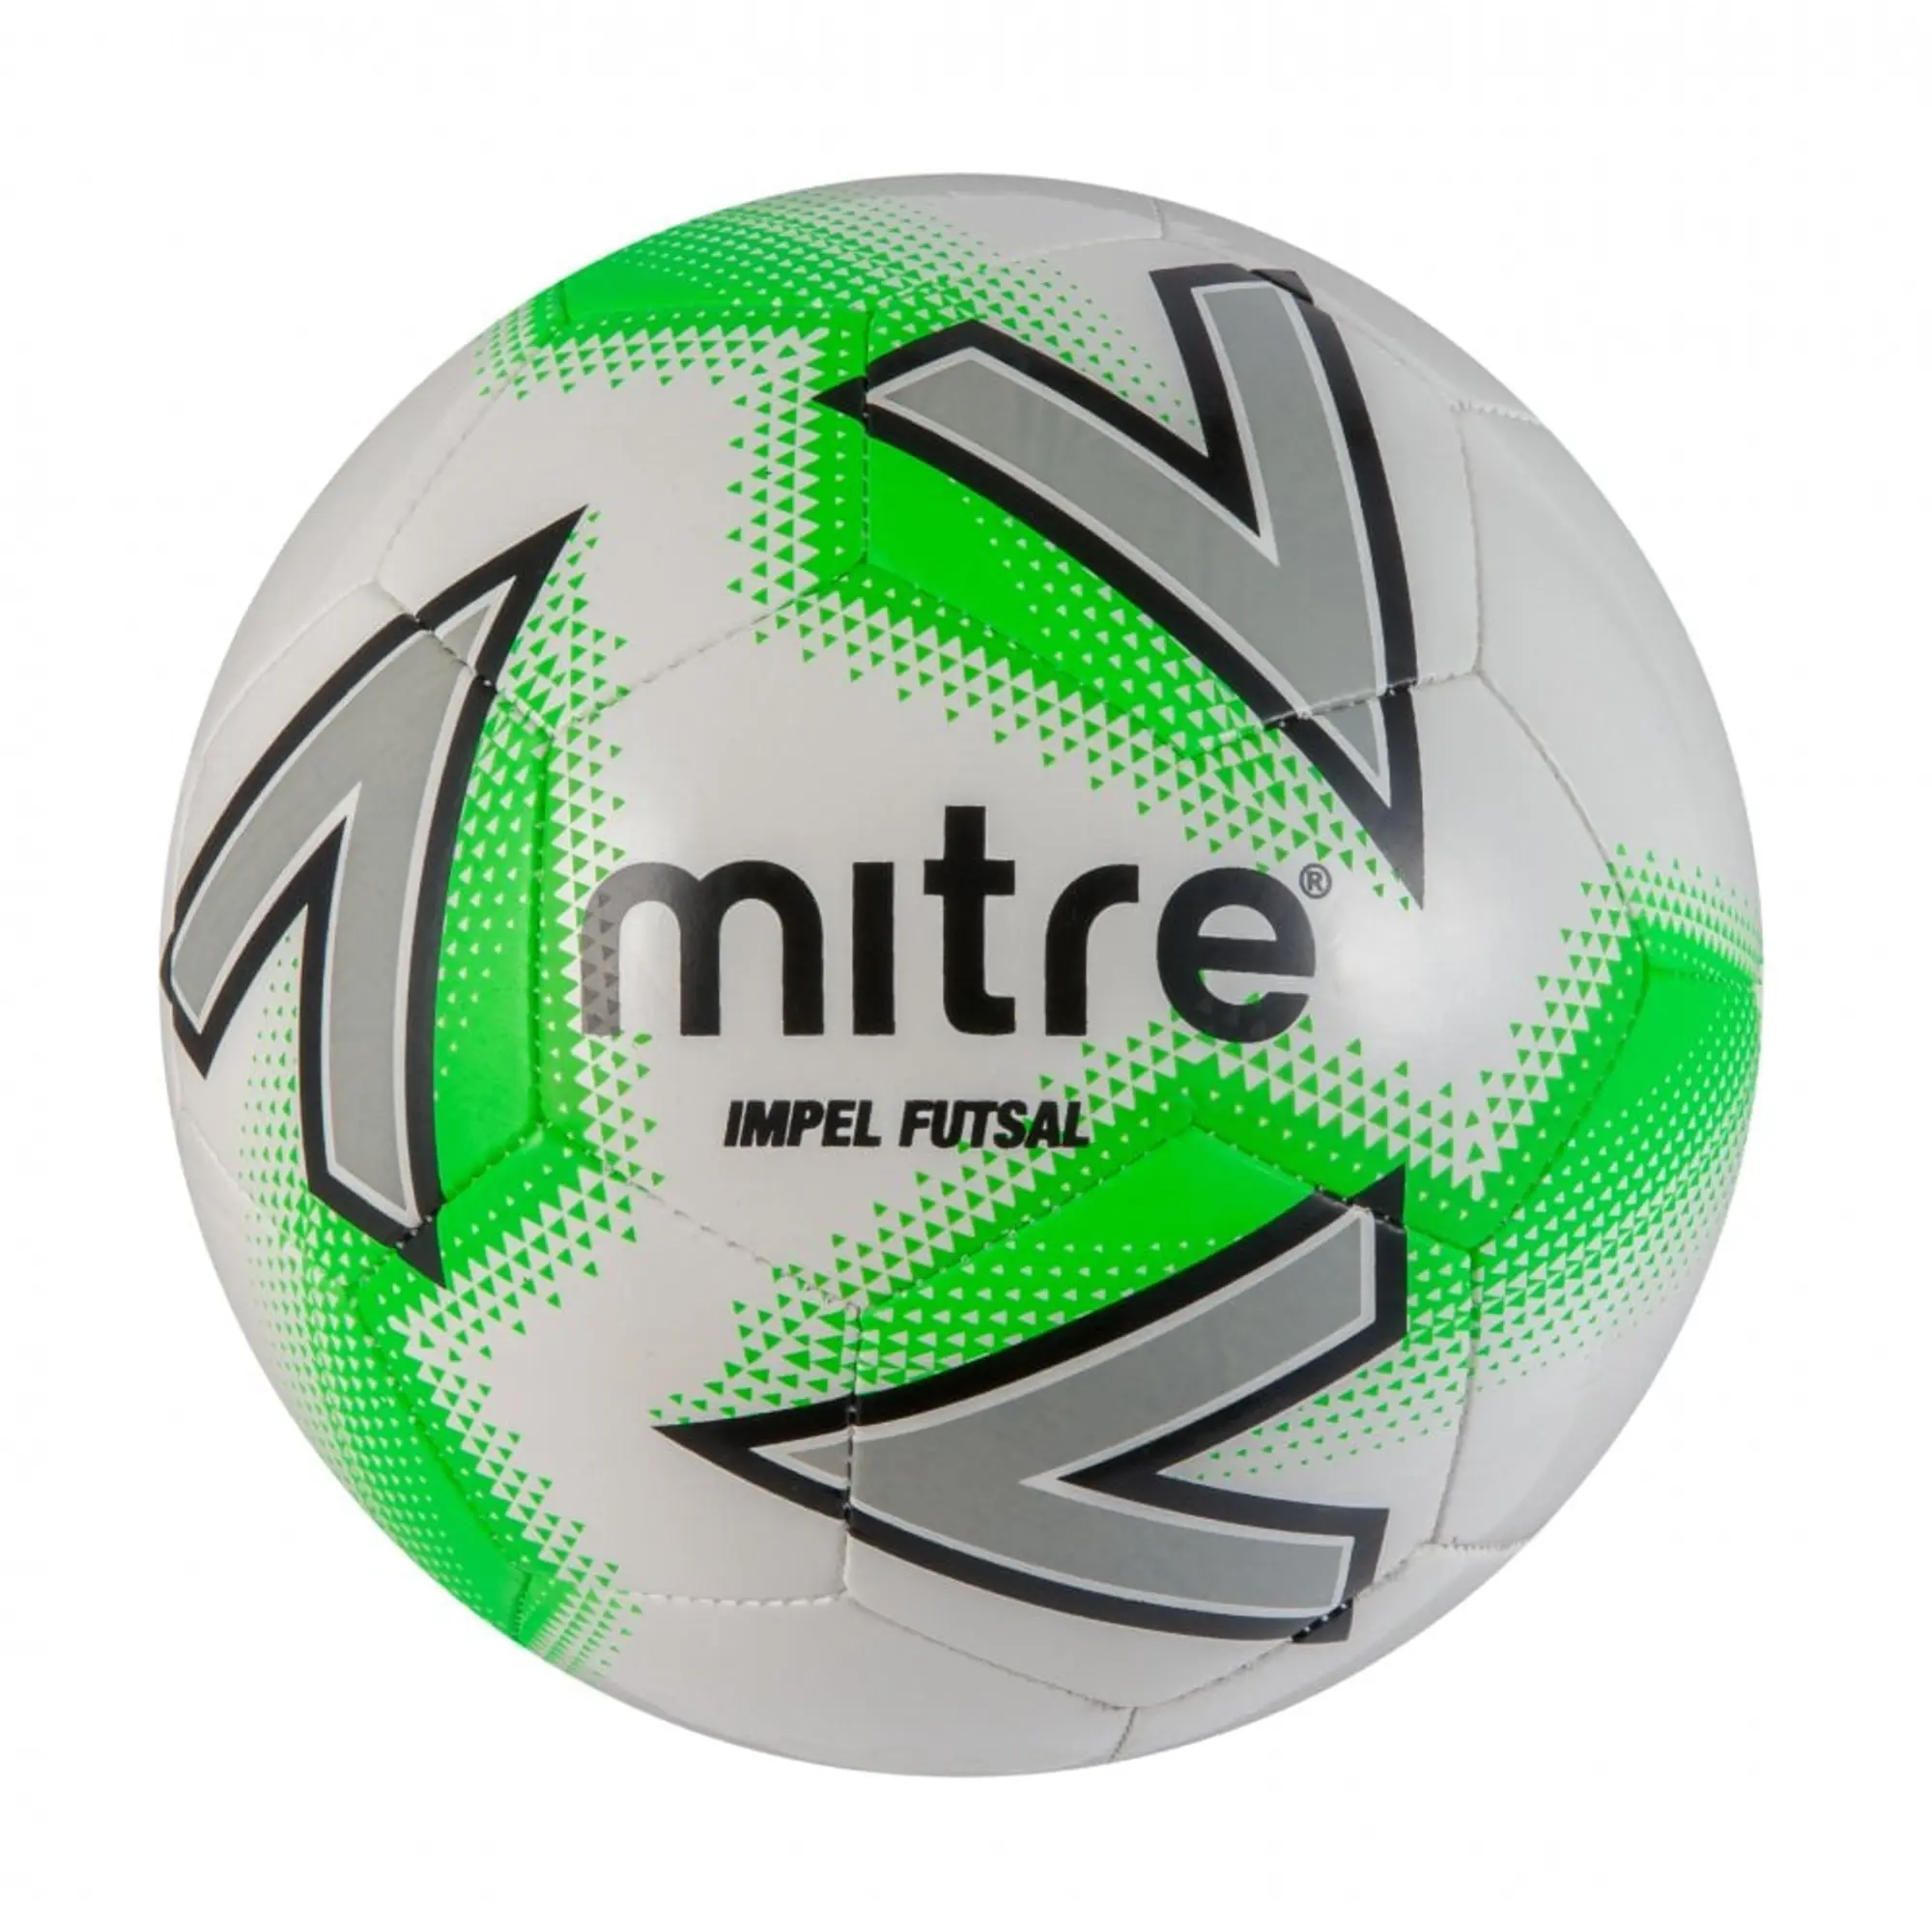 Mitre Impel Futsal Football - WHITE/GREEN